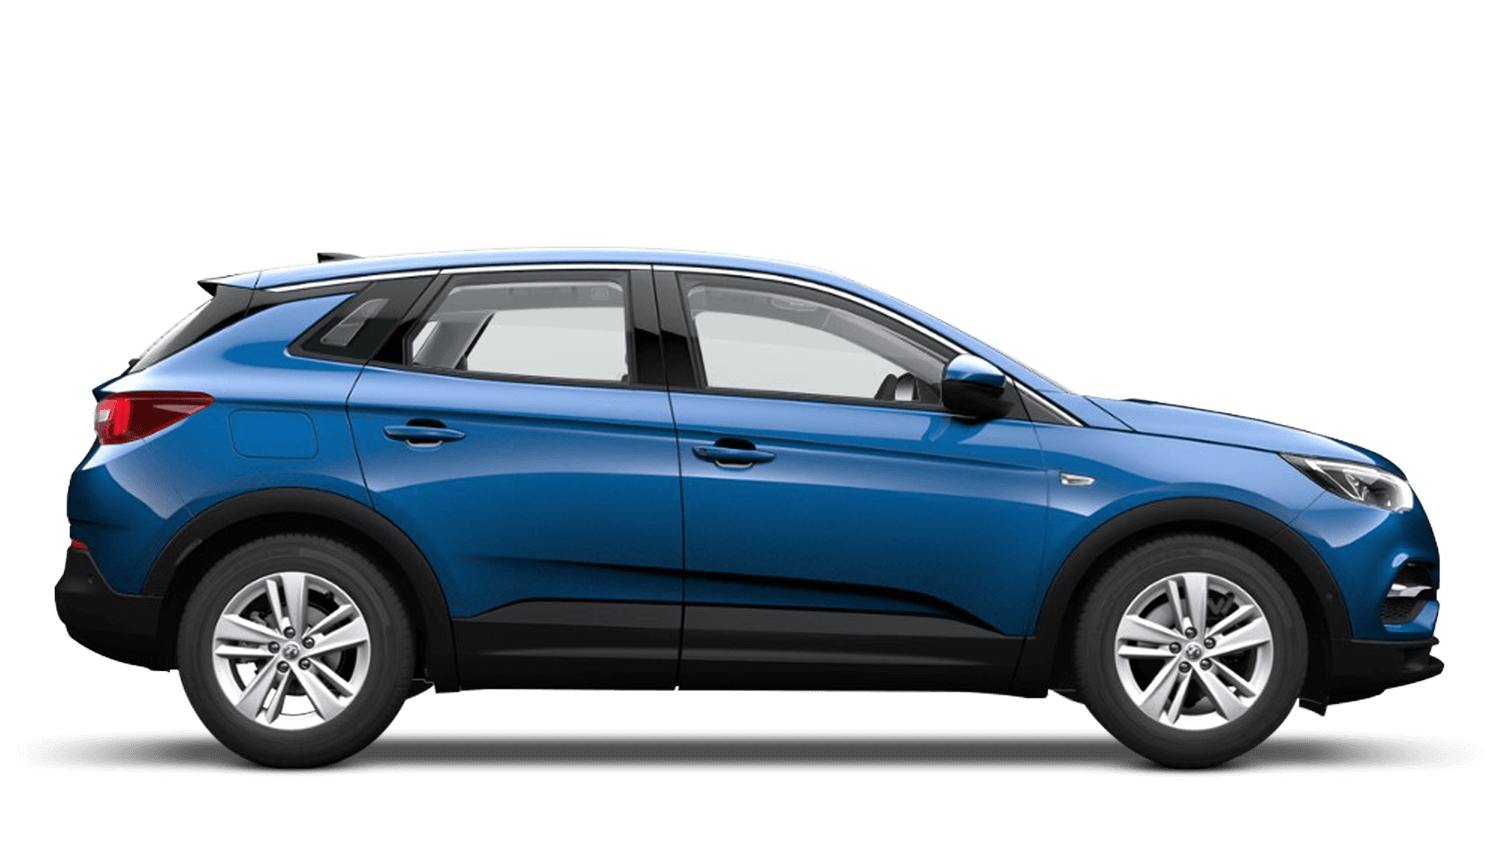 Topaz Blue (Metallic) Vauxhall Grandland X